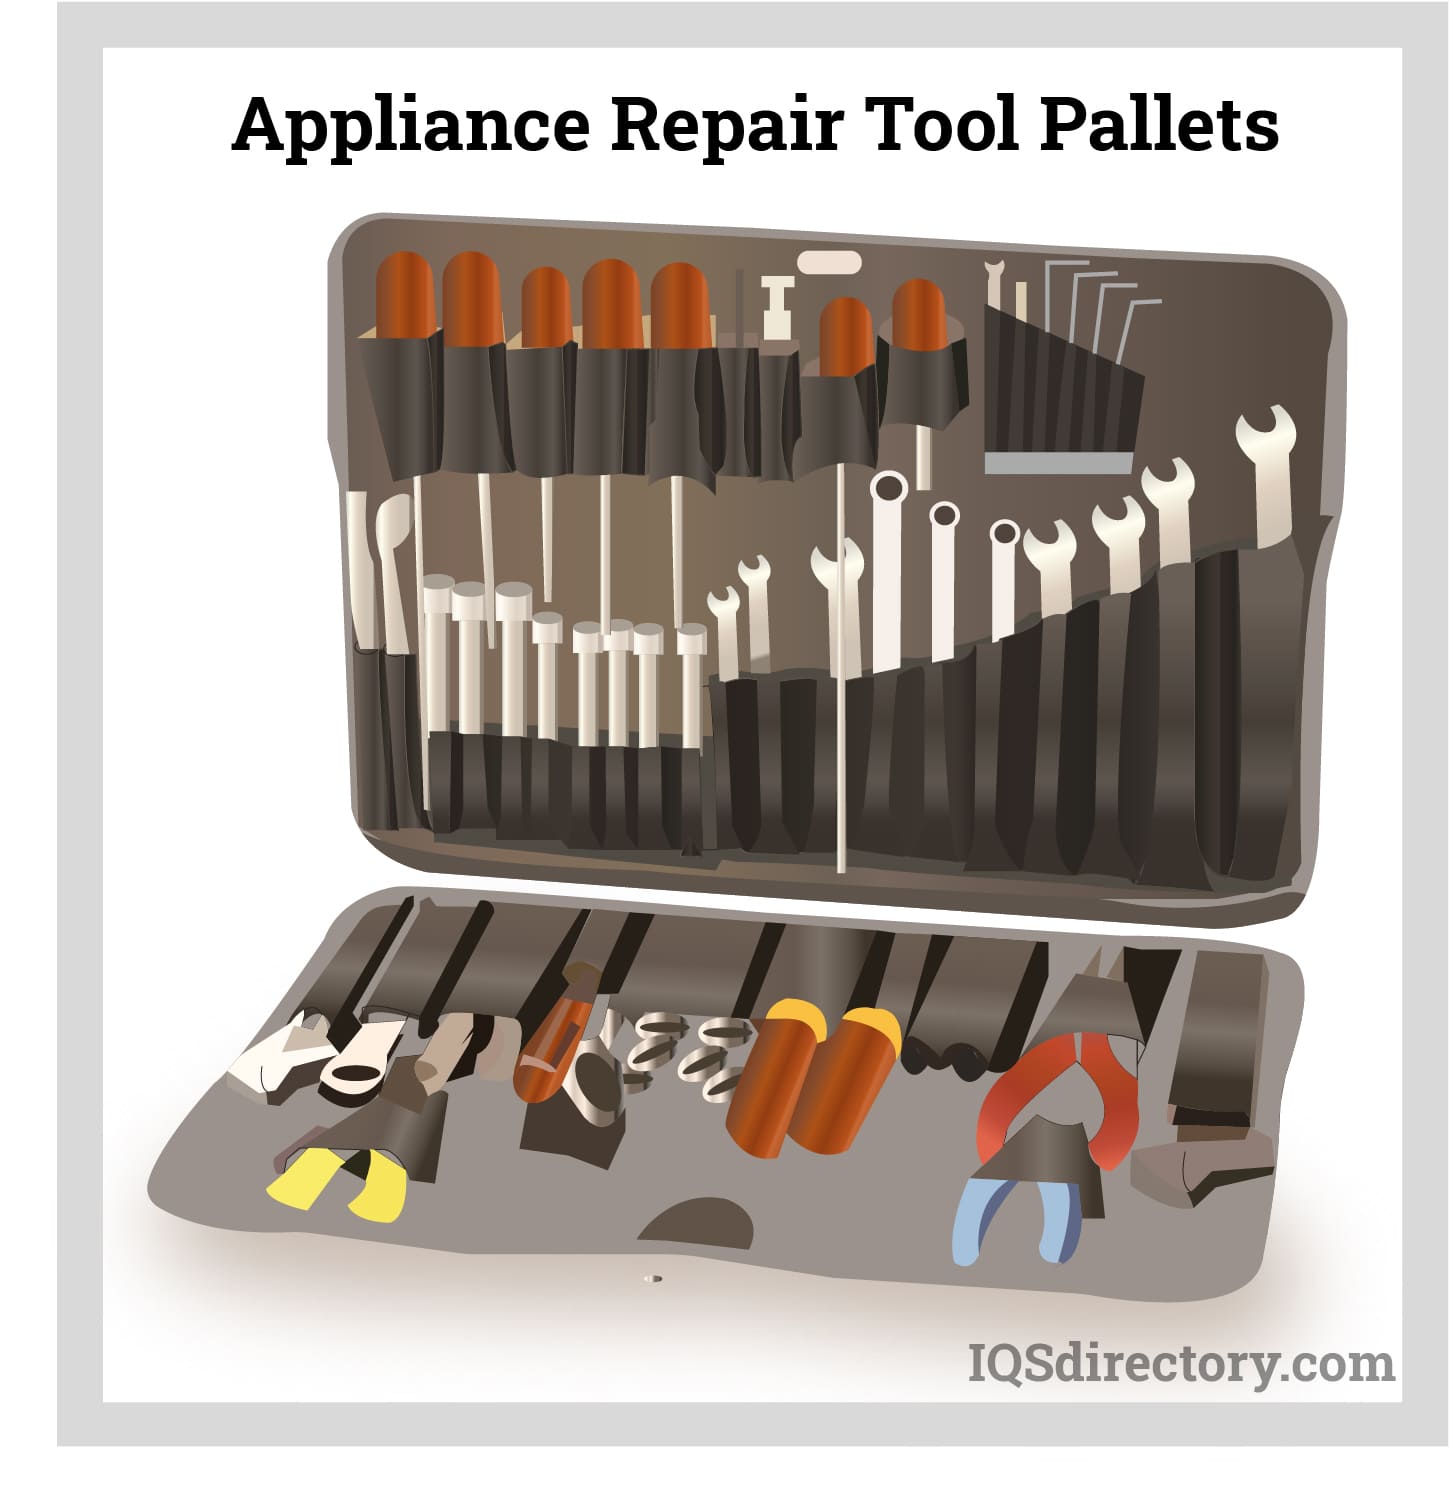 Appliance Repair Tool Pallets